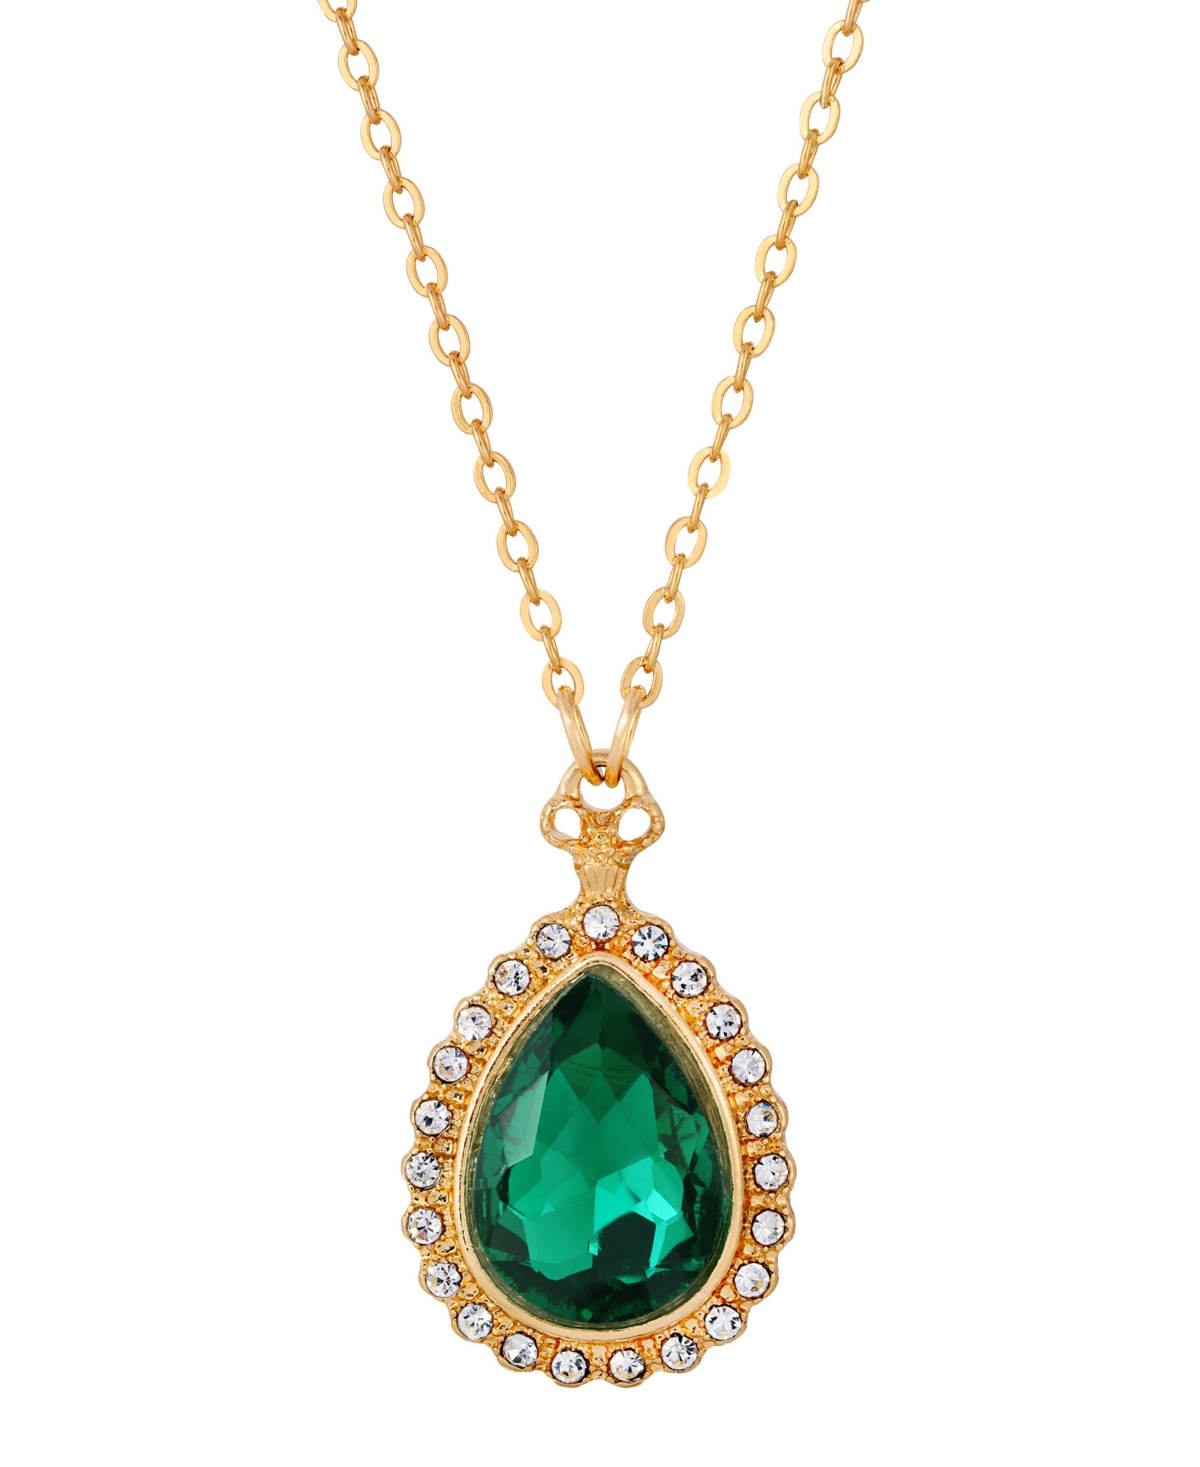 Vintage Style Jewelry, Retro Jewelry 2028 Teardrop Necklace - Green $21.00 AT vintagedancer.com